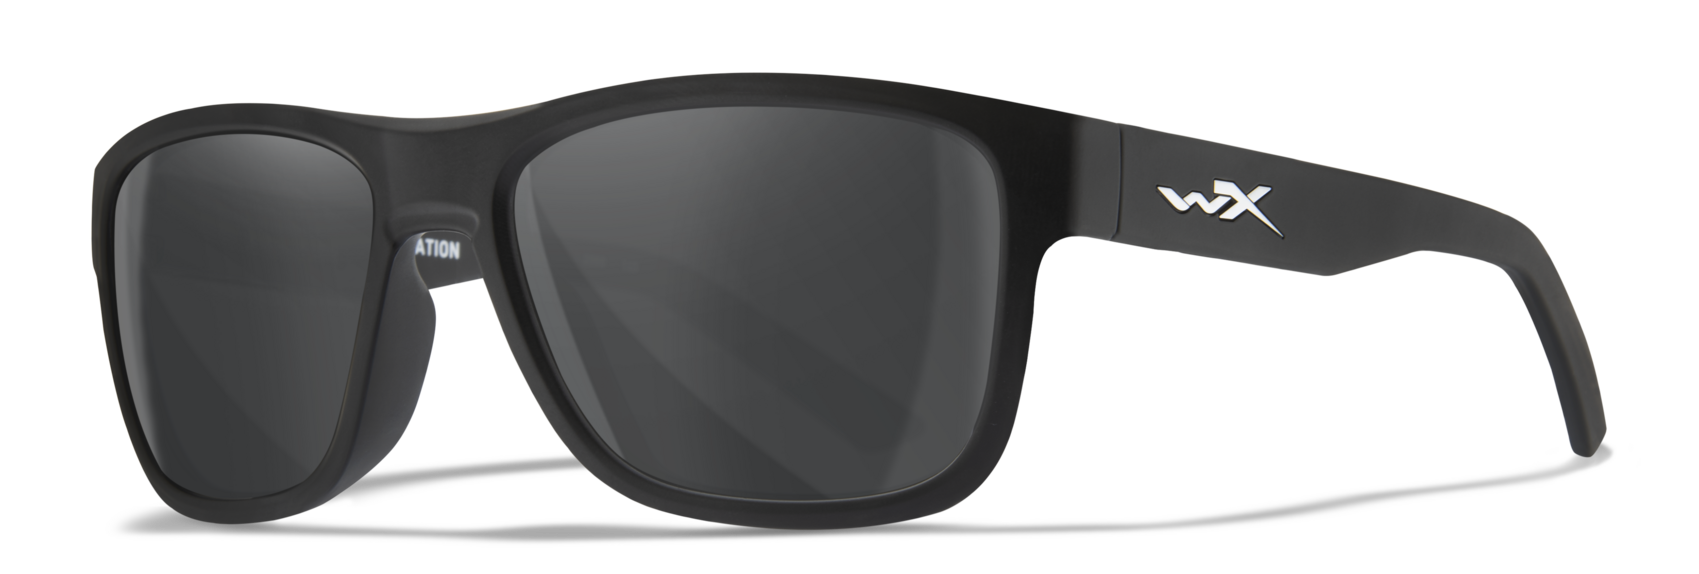 Wiley X WX OVATION Oval Sunglasses  Matte Black 56-18-140